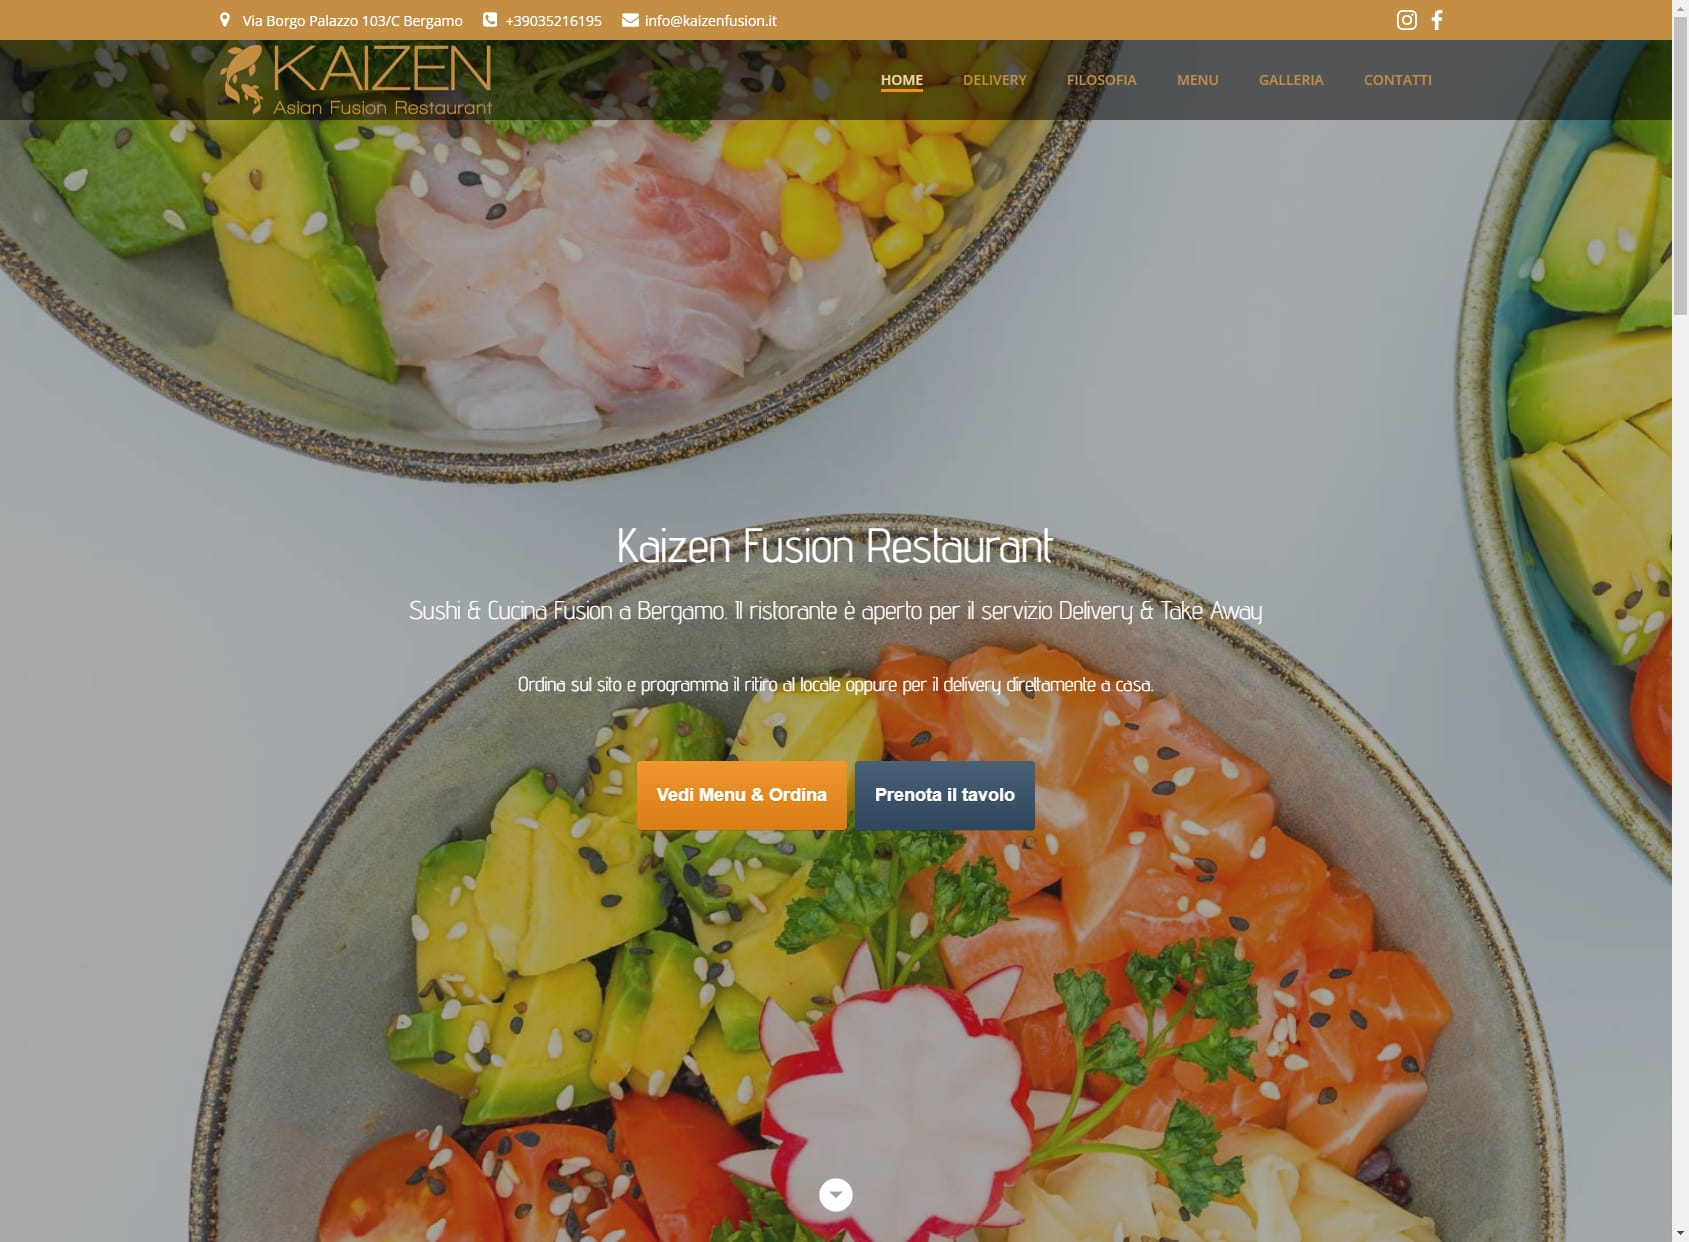 Kaizen Fusion Restaurant